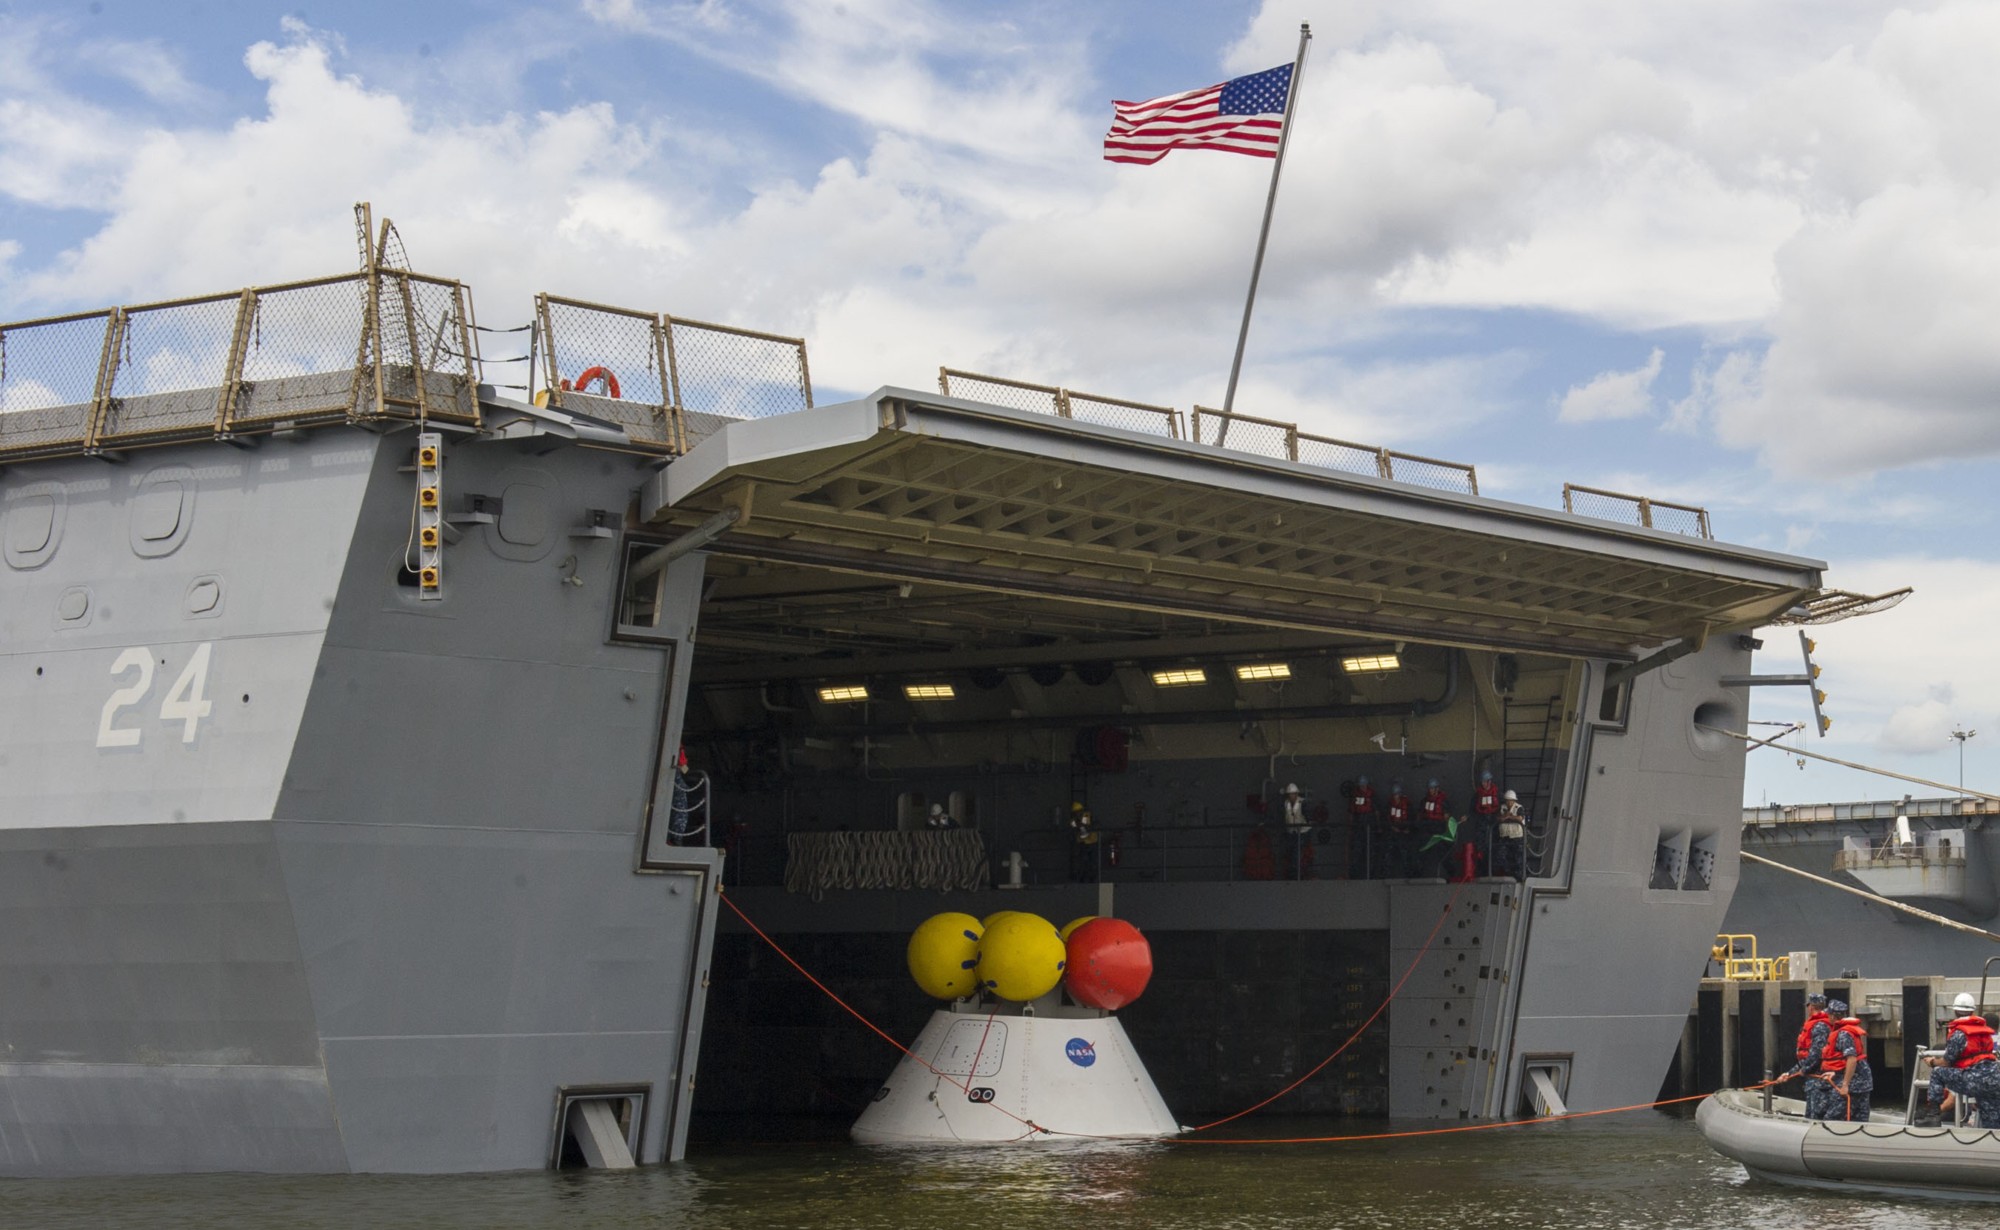 lpd-24 uss arlington amphibious transport dock landing ship us navy nasa orion capsule recovery 44